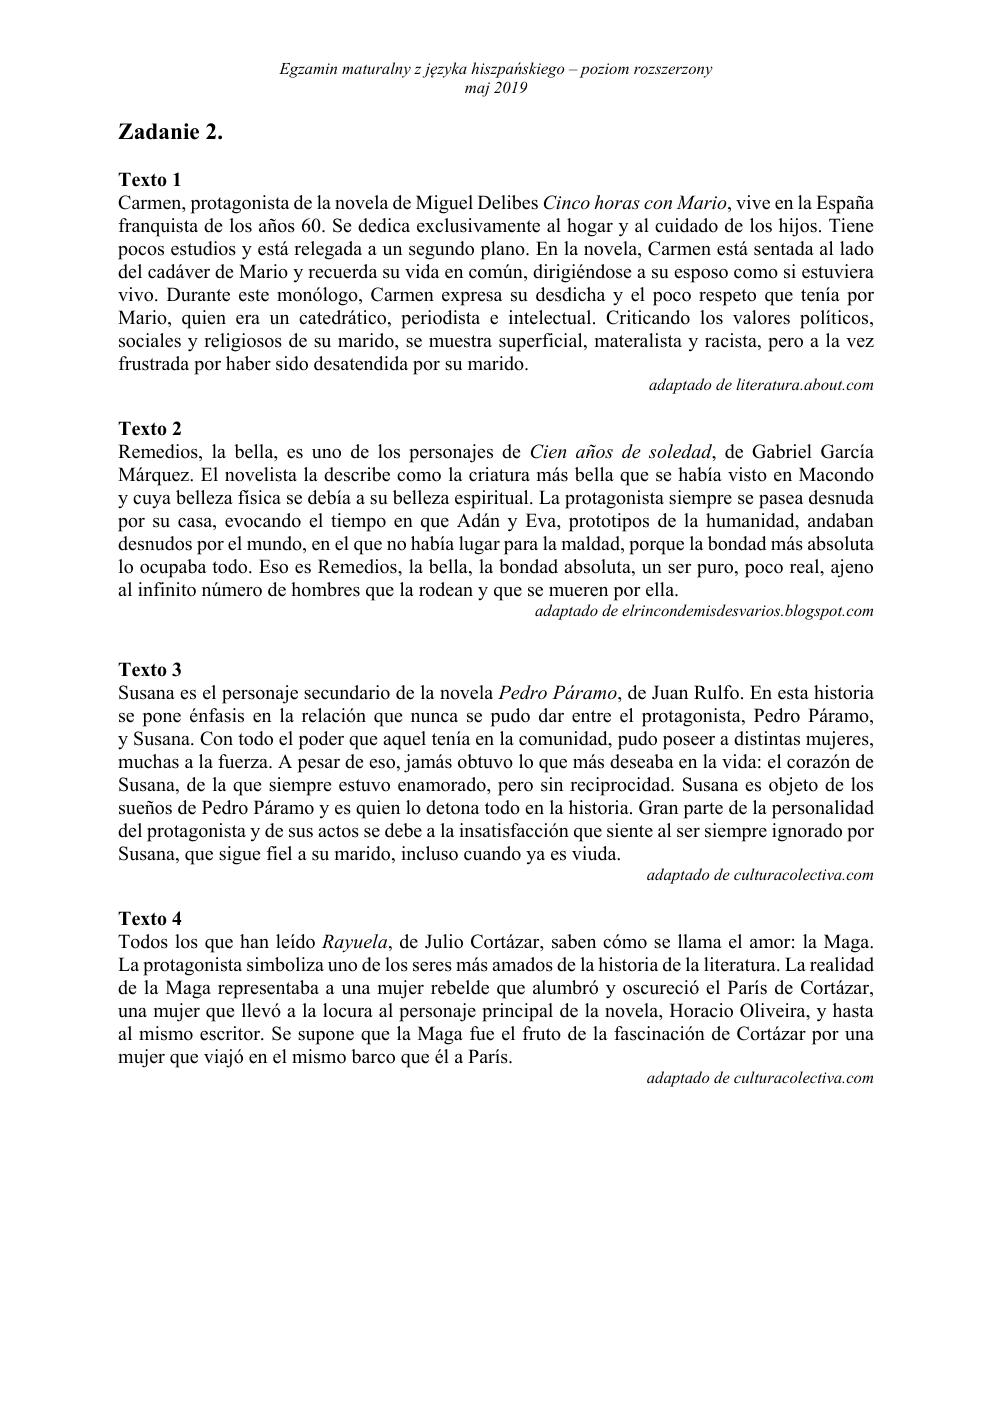 matura-2019-jezyk-hiszpanski-rozszerzony-transkrypcja-2